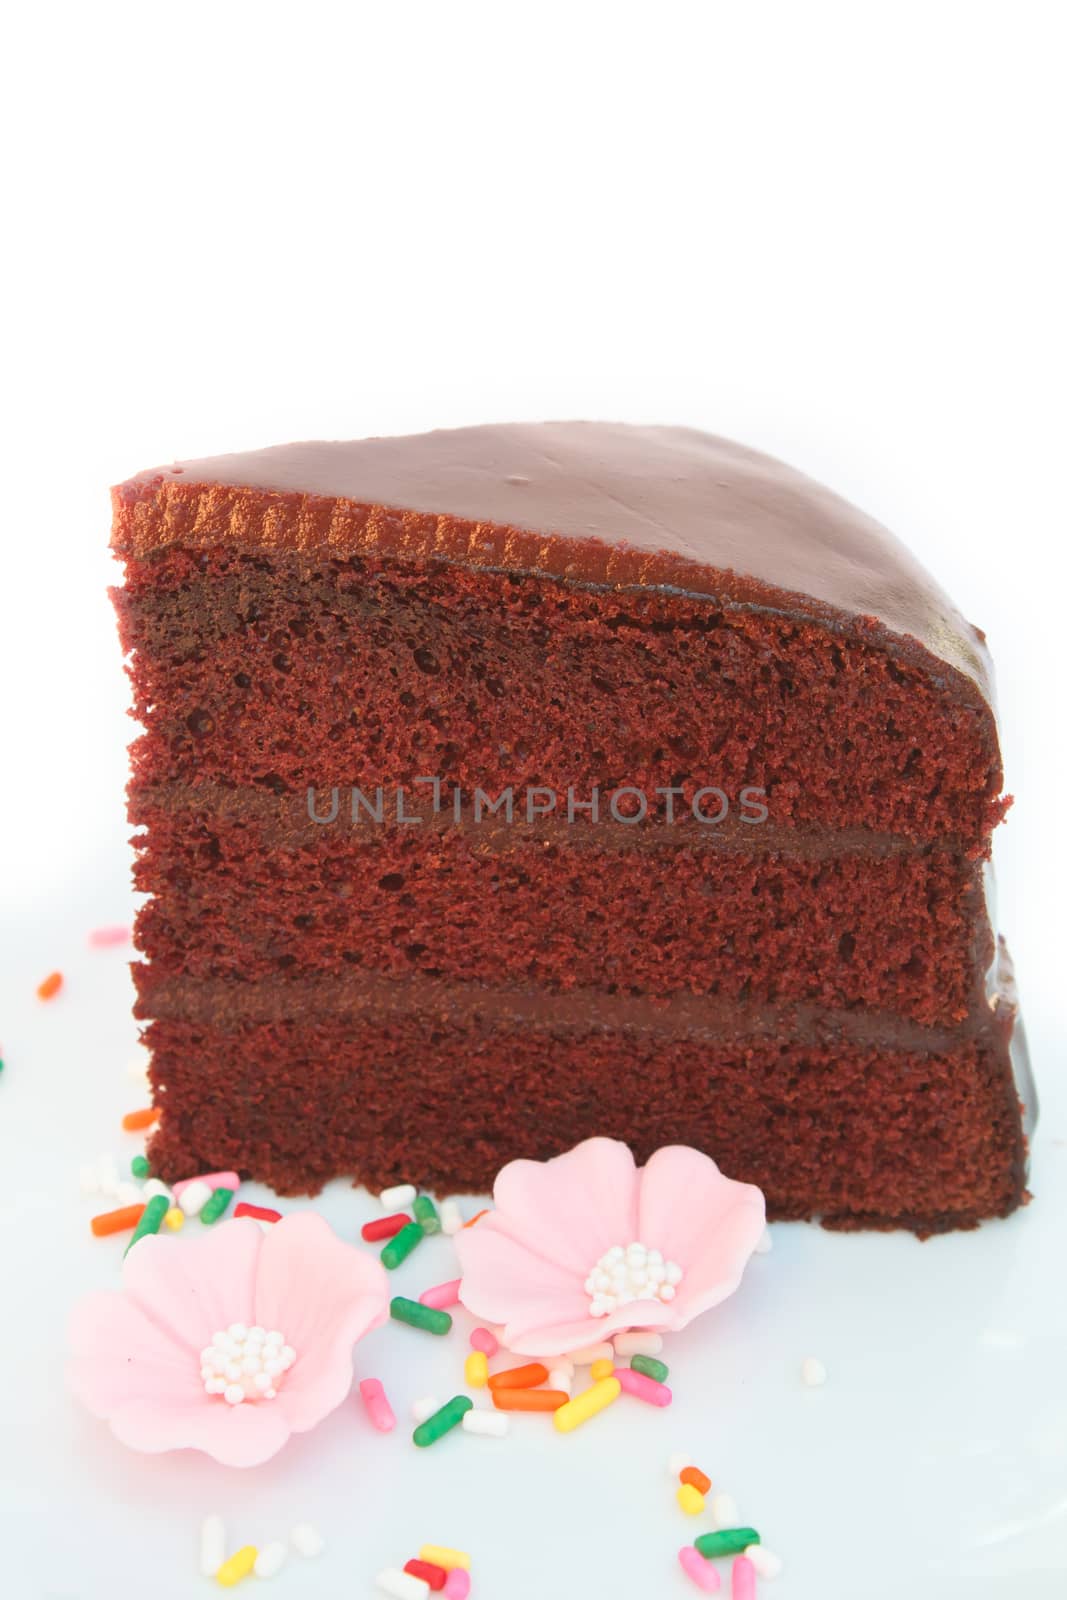 piece of chocolate cake with fudge sauce.